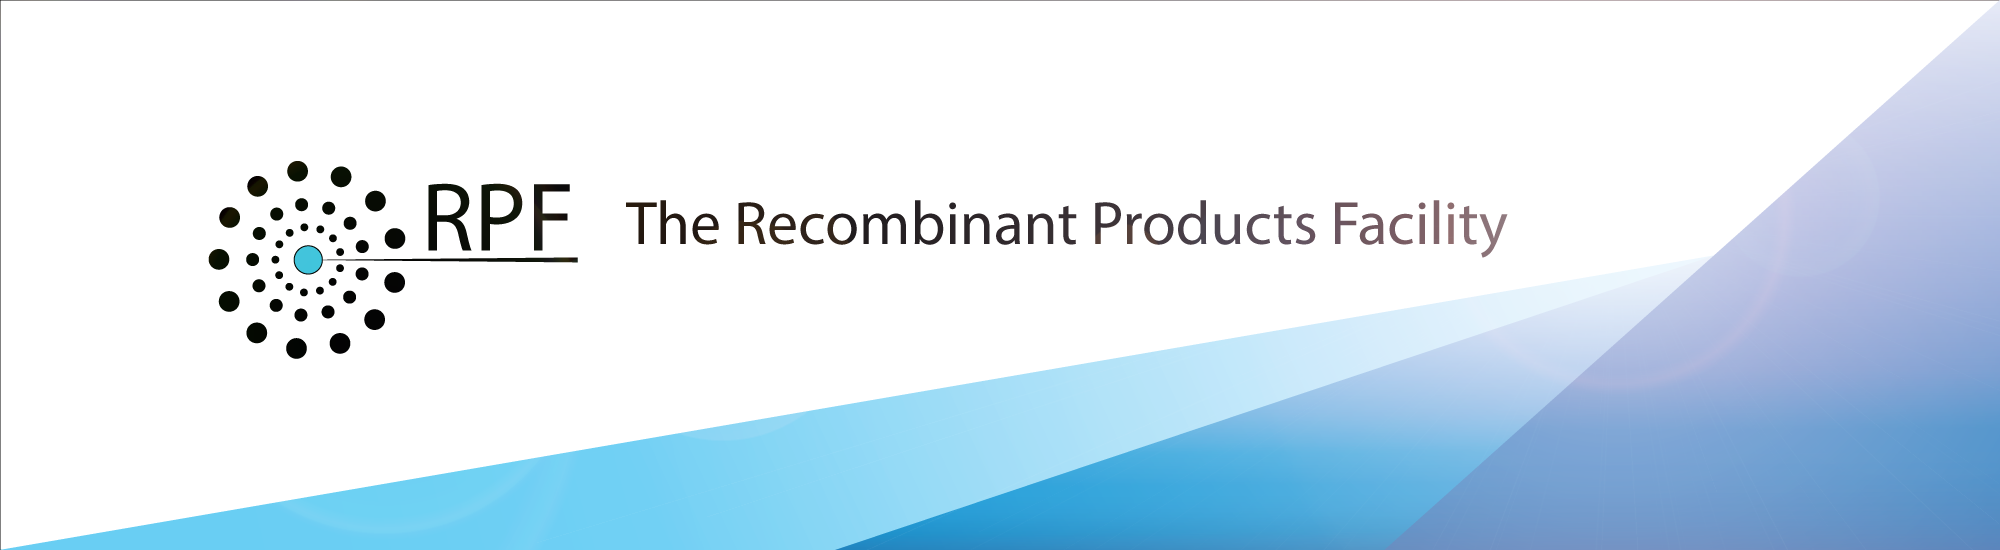 Recombinant products facility header